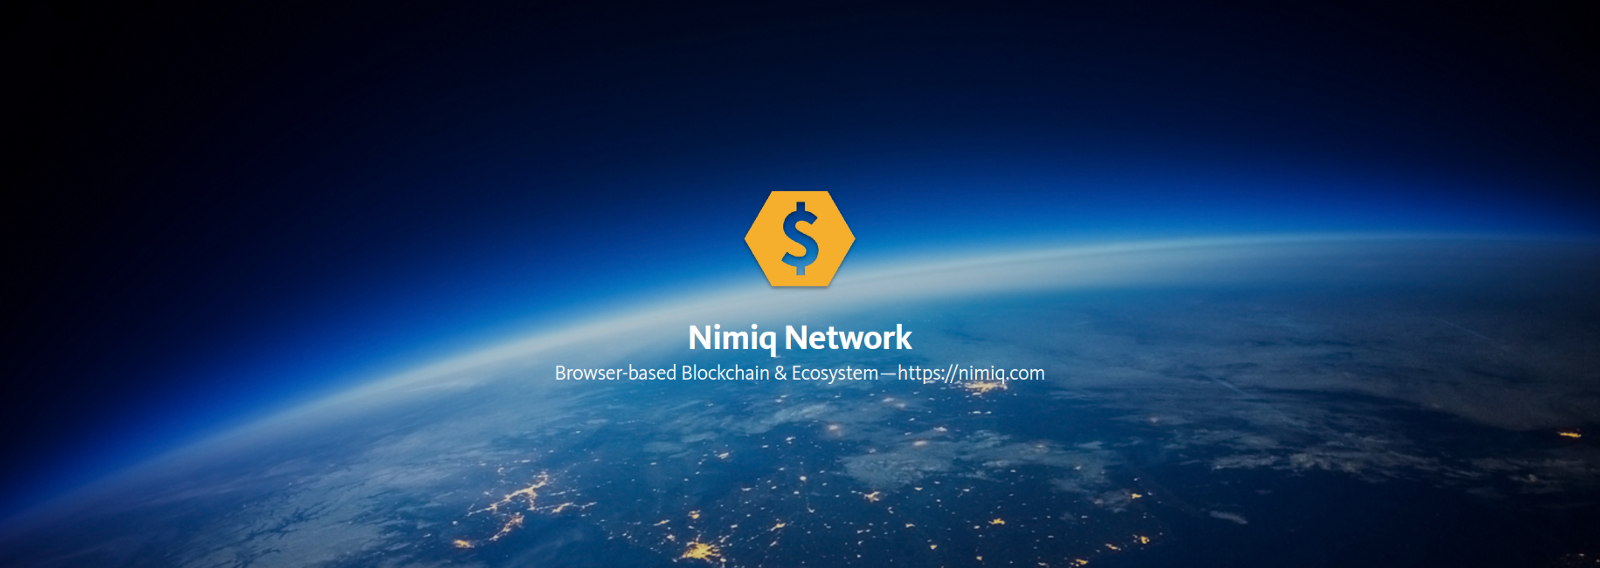 How To Buy Nimiq (NET)